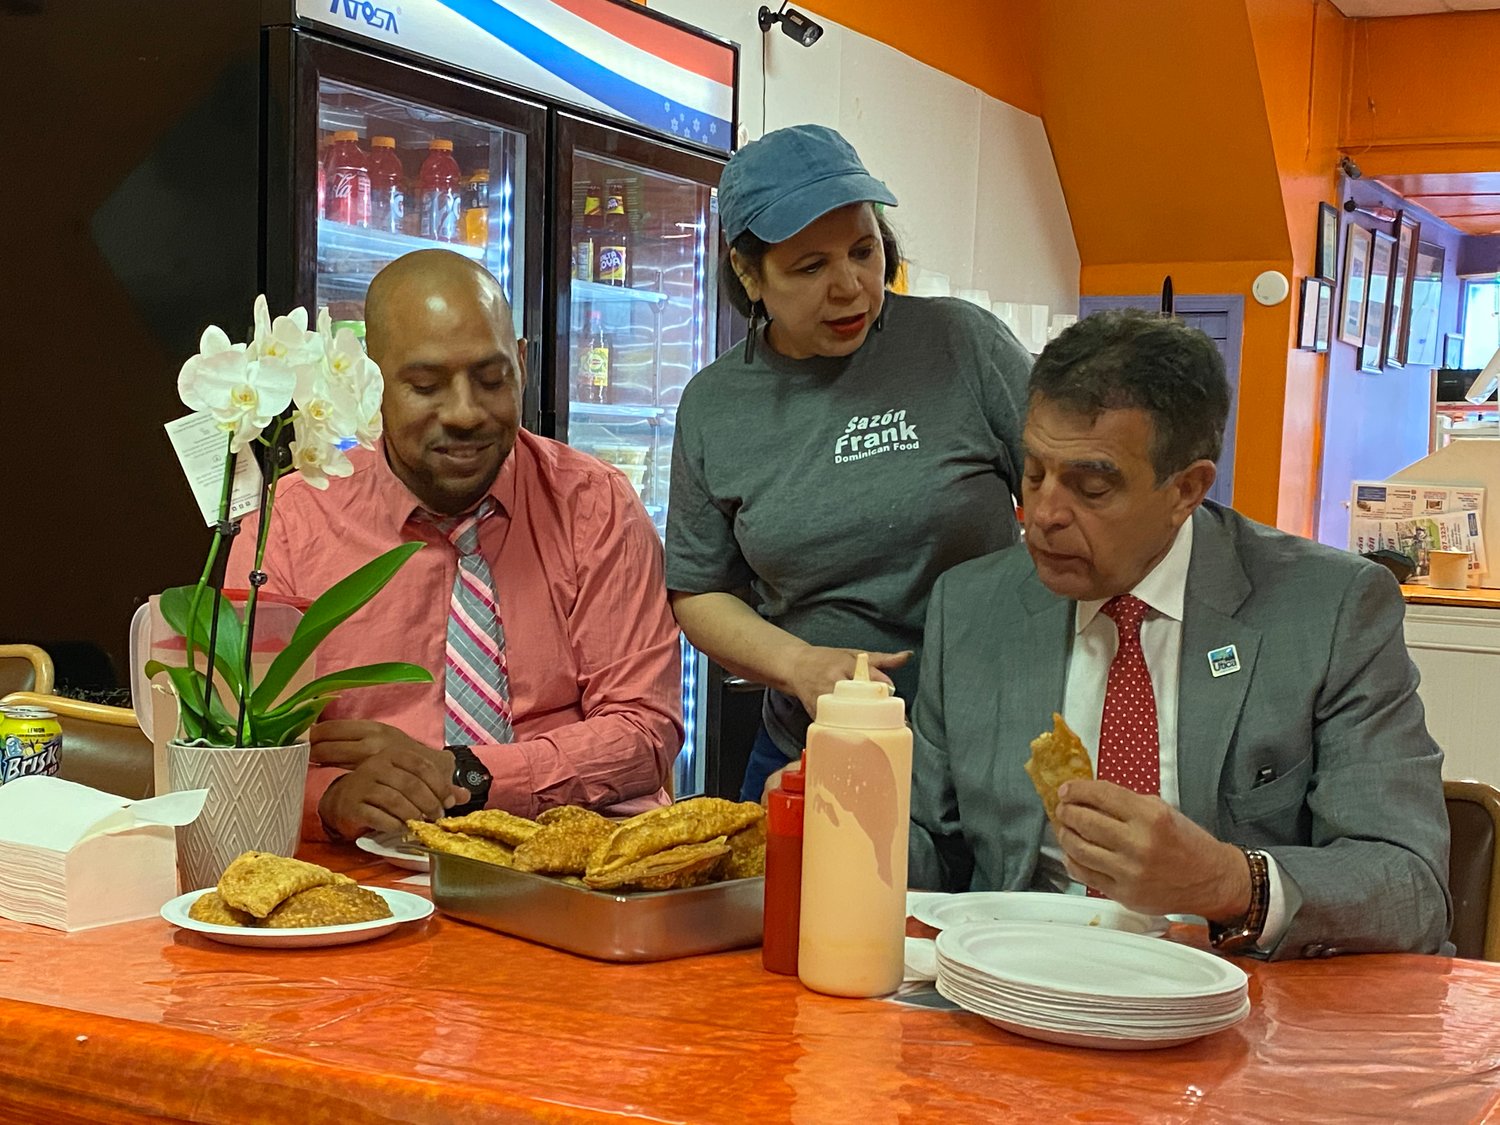 Nieve Nunez (center) checking in on Utica Mayor Robert Palmieri (right) as he enjoys an empanada from Sazón Frank Restaurant.